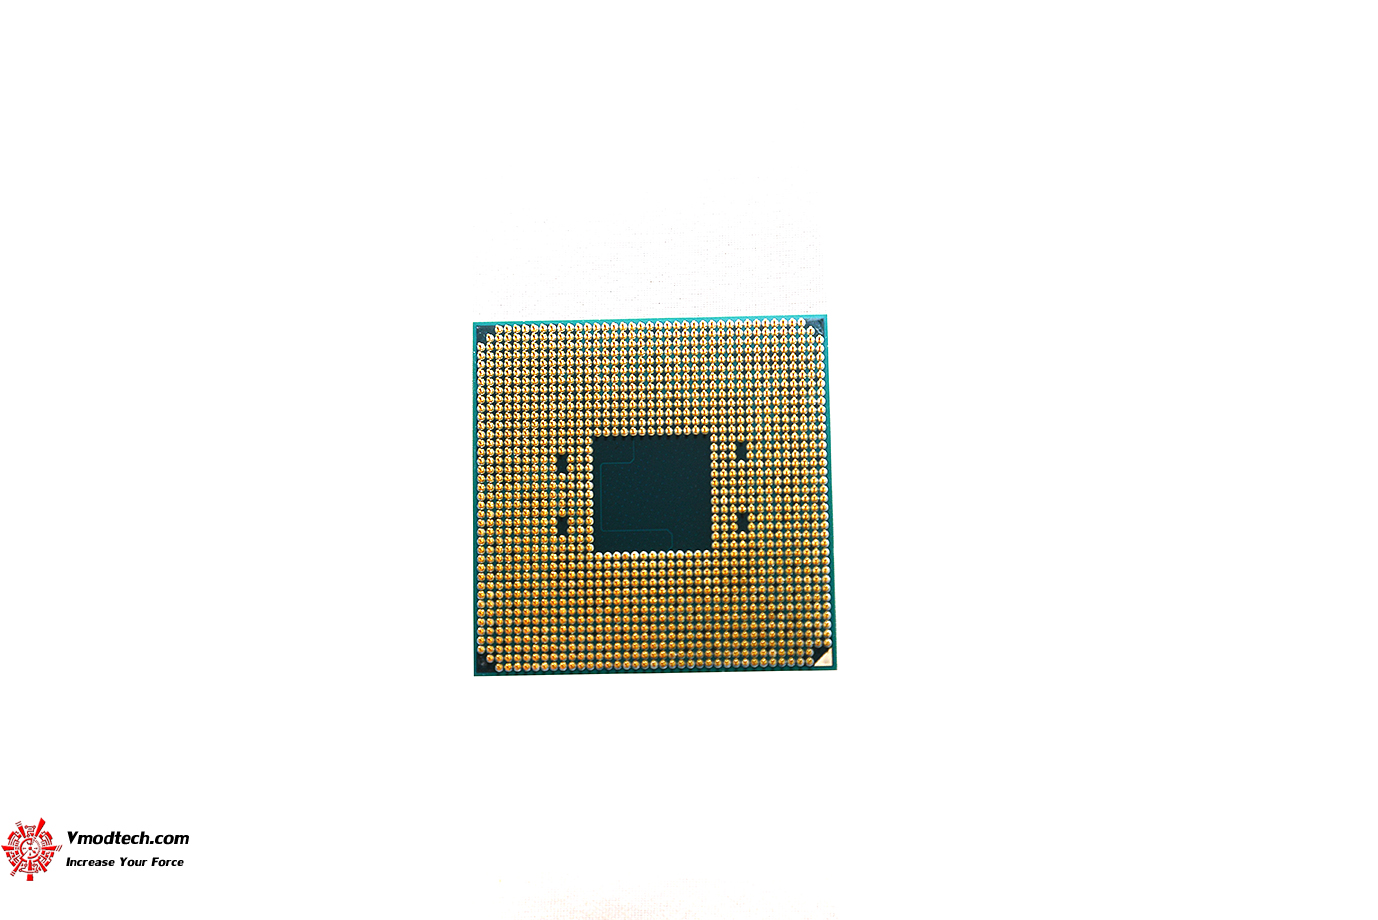 dsc 8821 AMD RYZEN 3 2200G RAVEN RIDGE PROCESSOR REVIEW